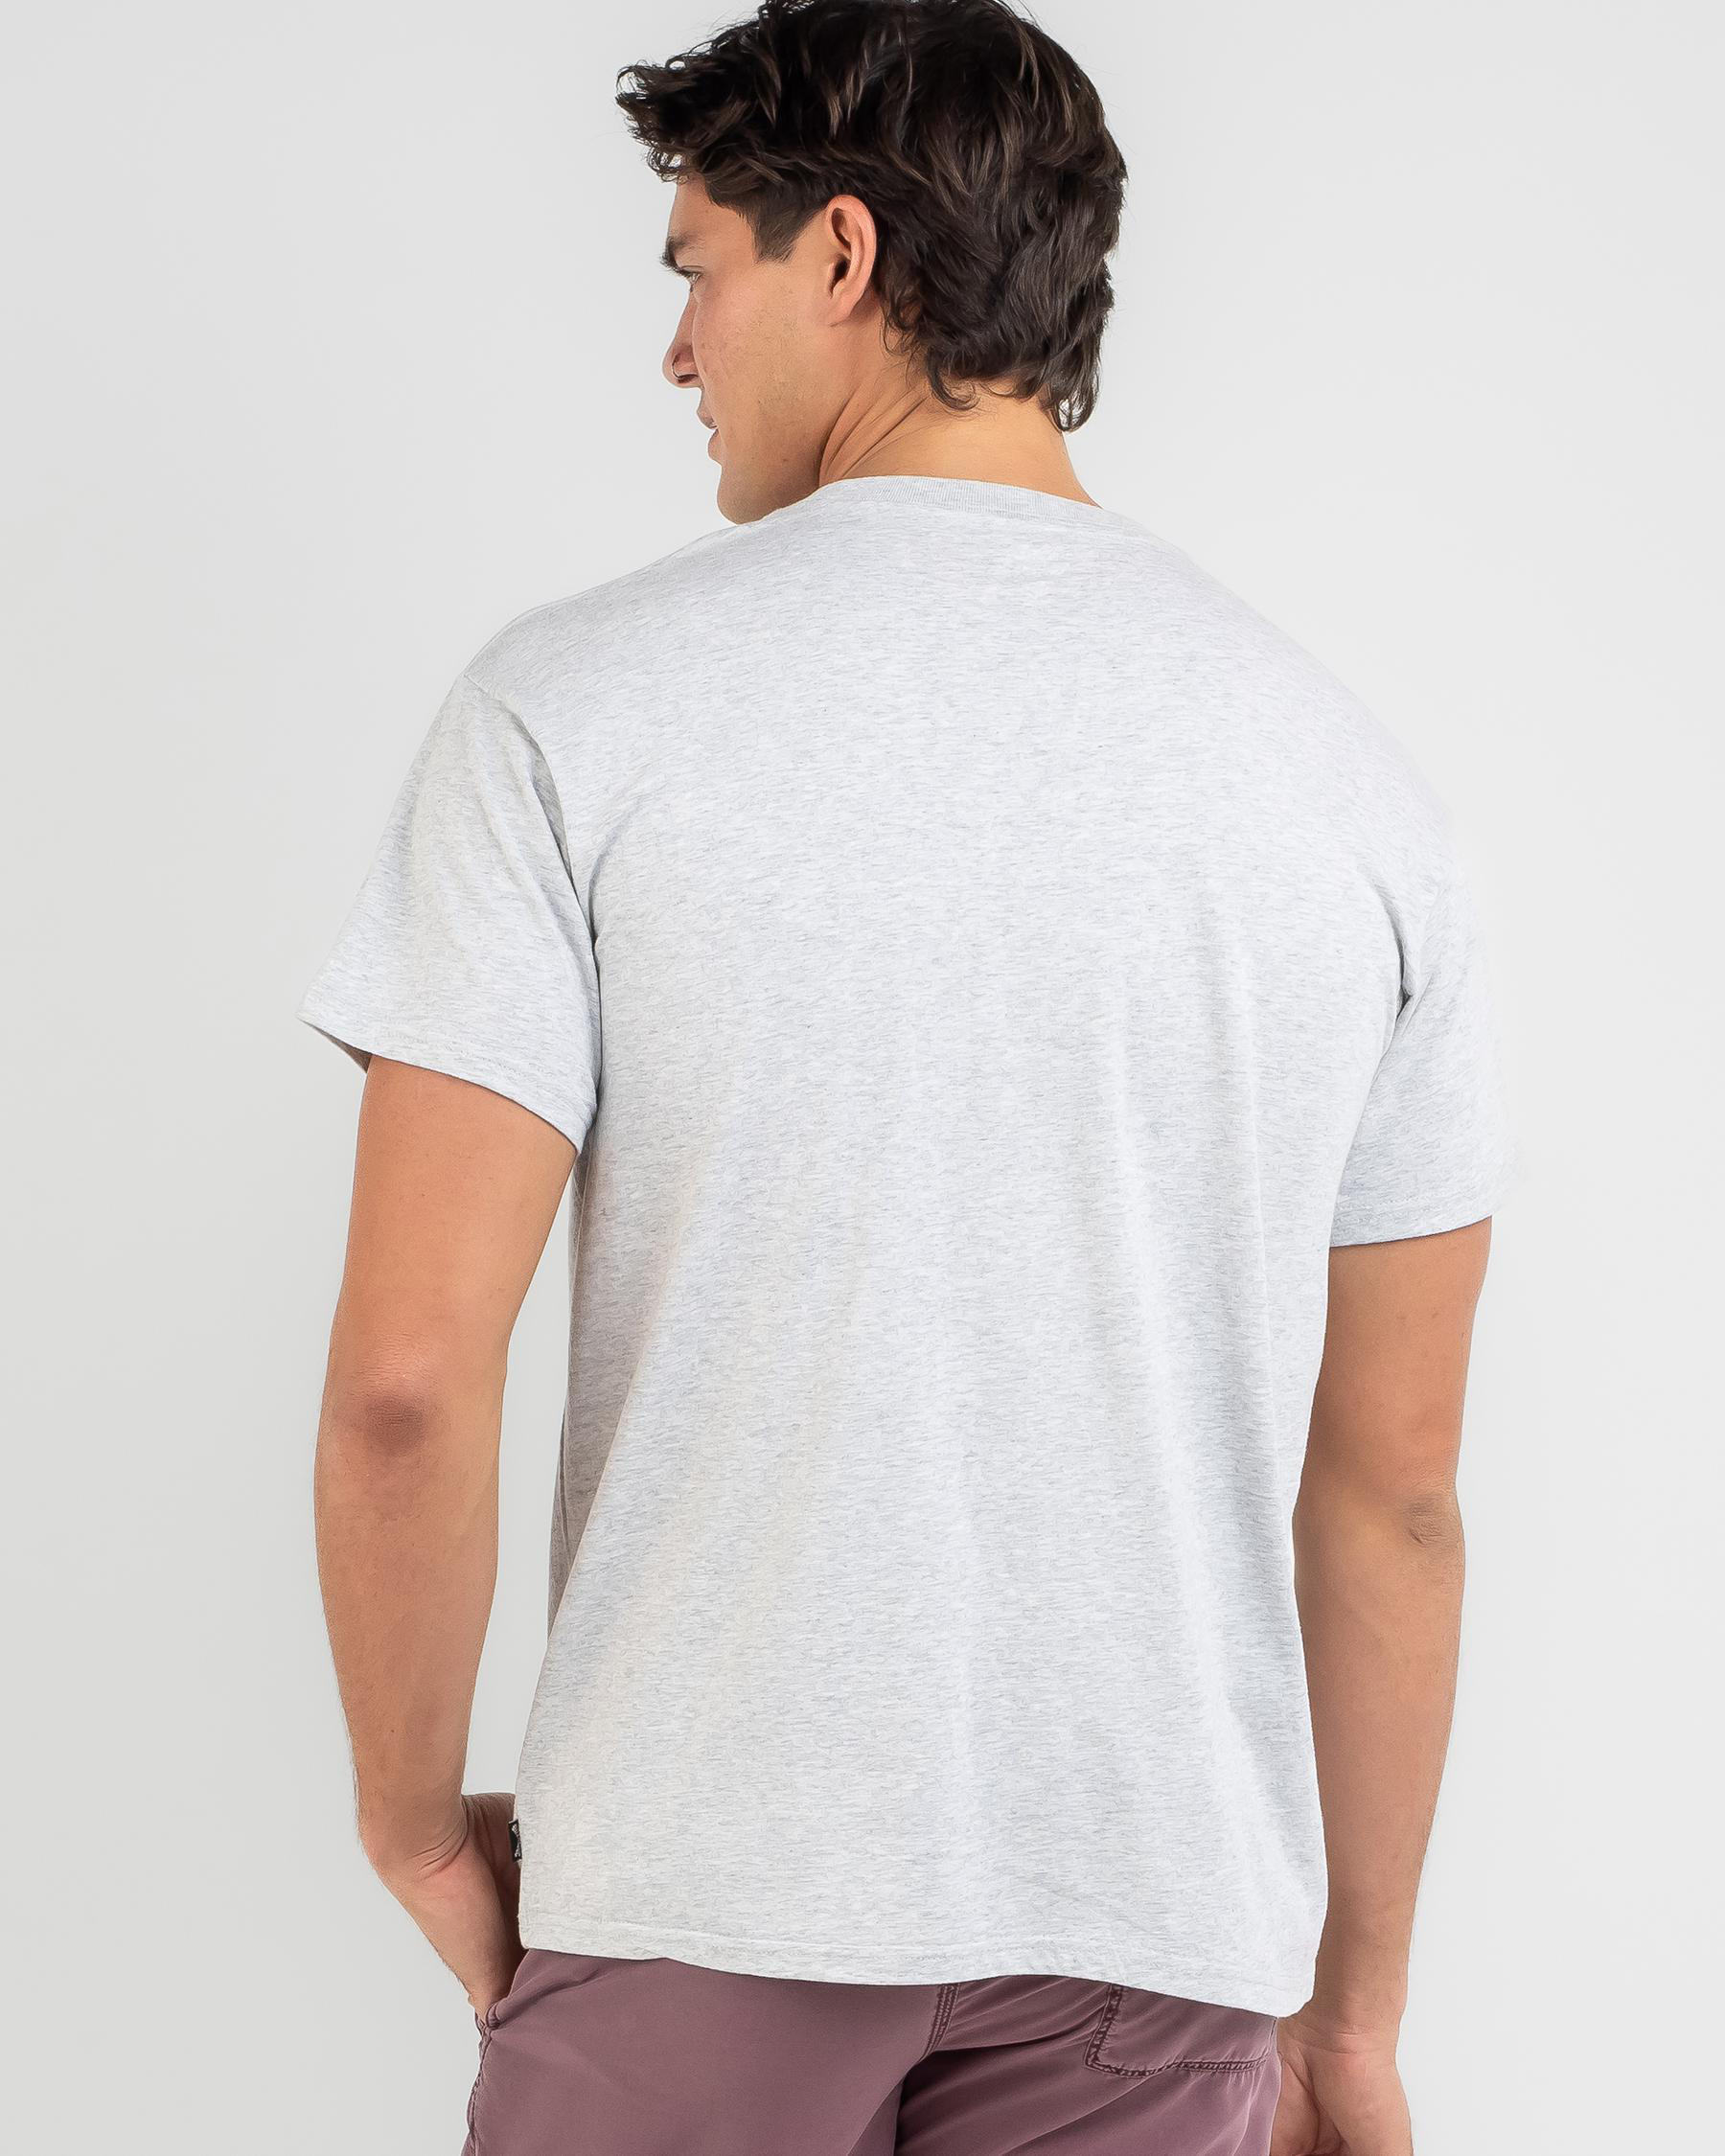 Billabong Goanna T-Shirt In Light Grey Heather - Fast Shipping & Easy ...